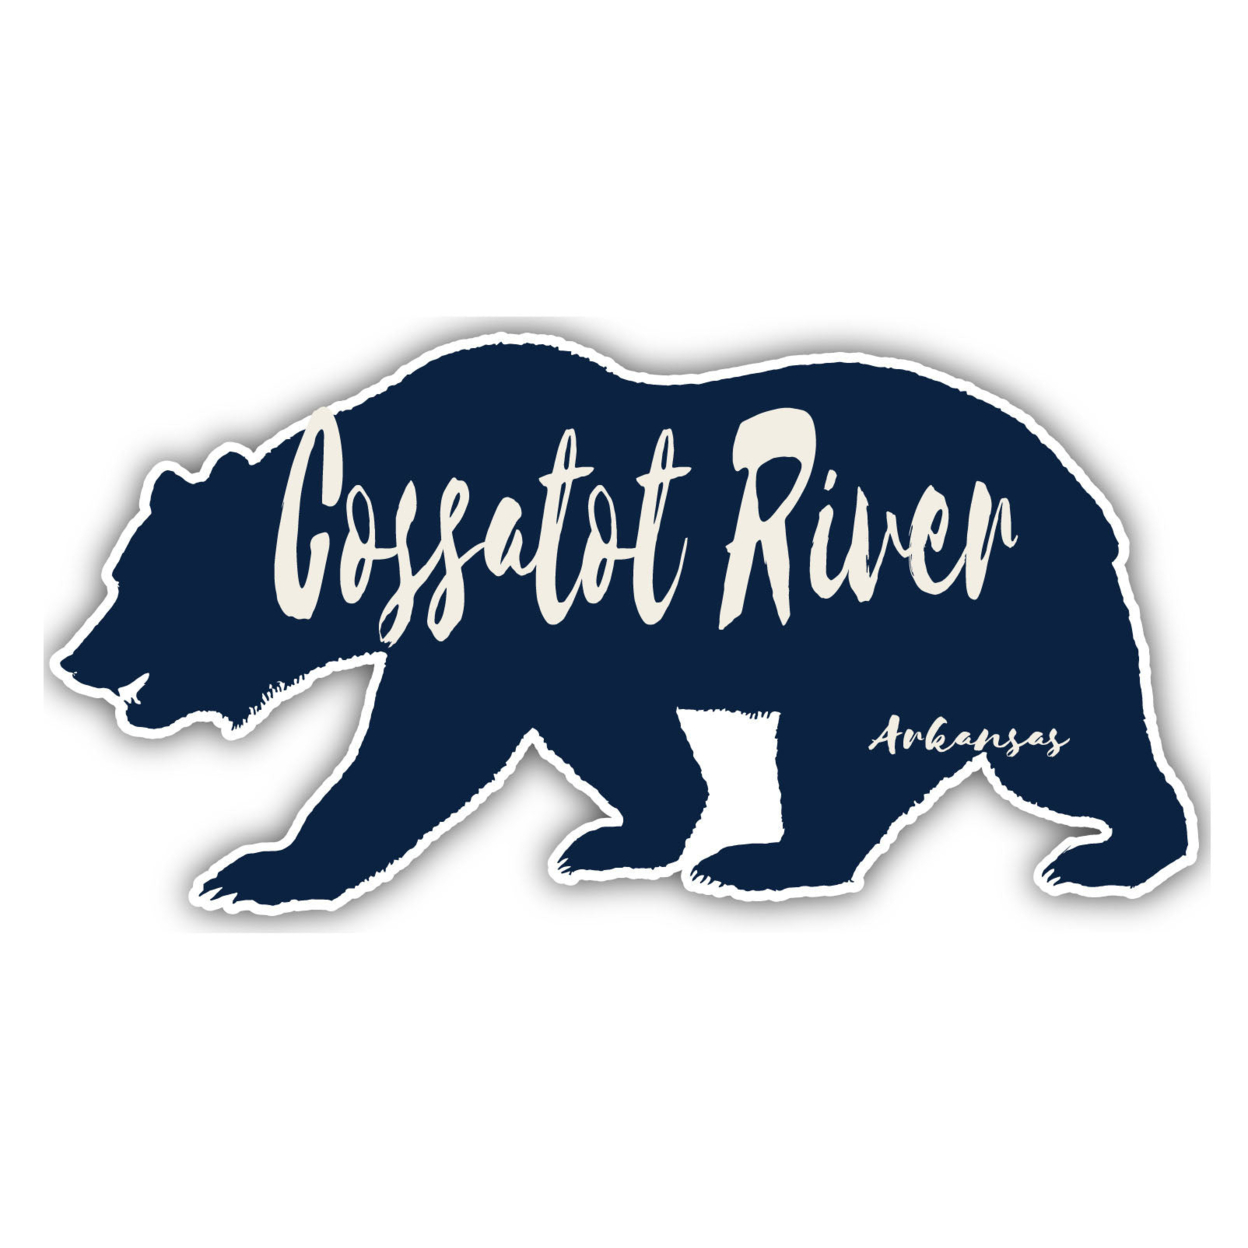 Cossatot River Arkansas Souvenir Decorative Stickers (Choose Theme And Size) - 4-Pack, 8-Inch, Bear